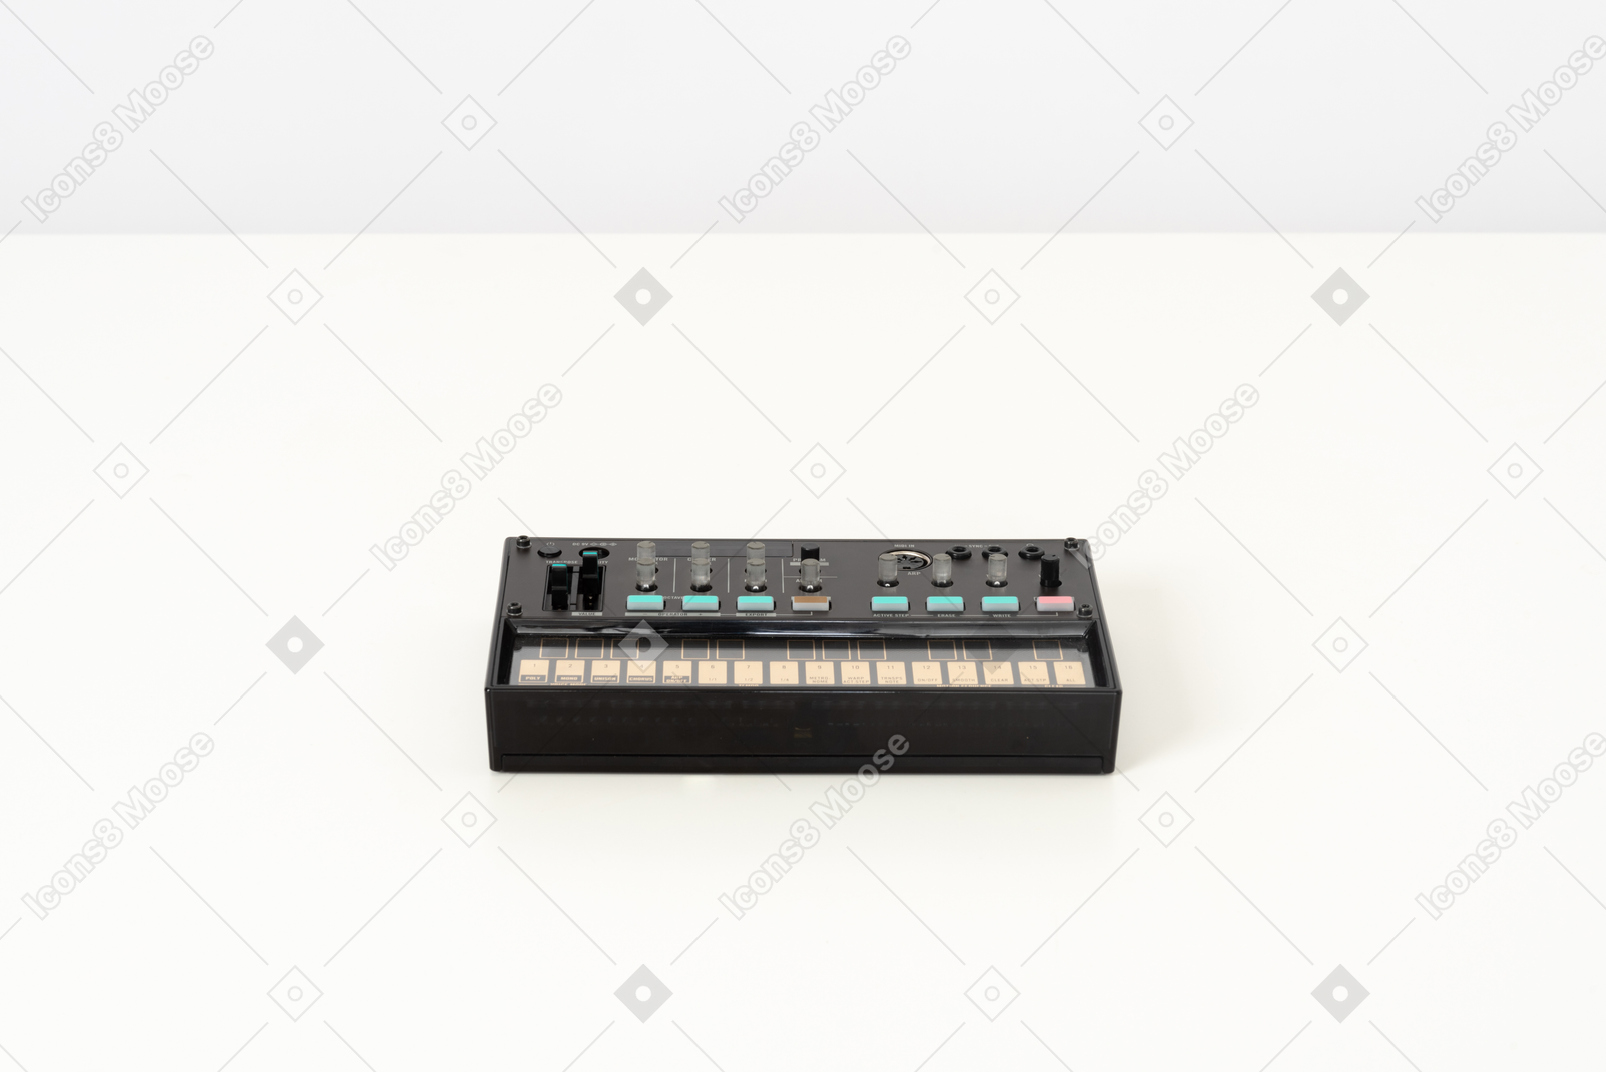 Black fm synthesizer on a white background